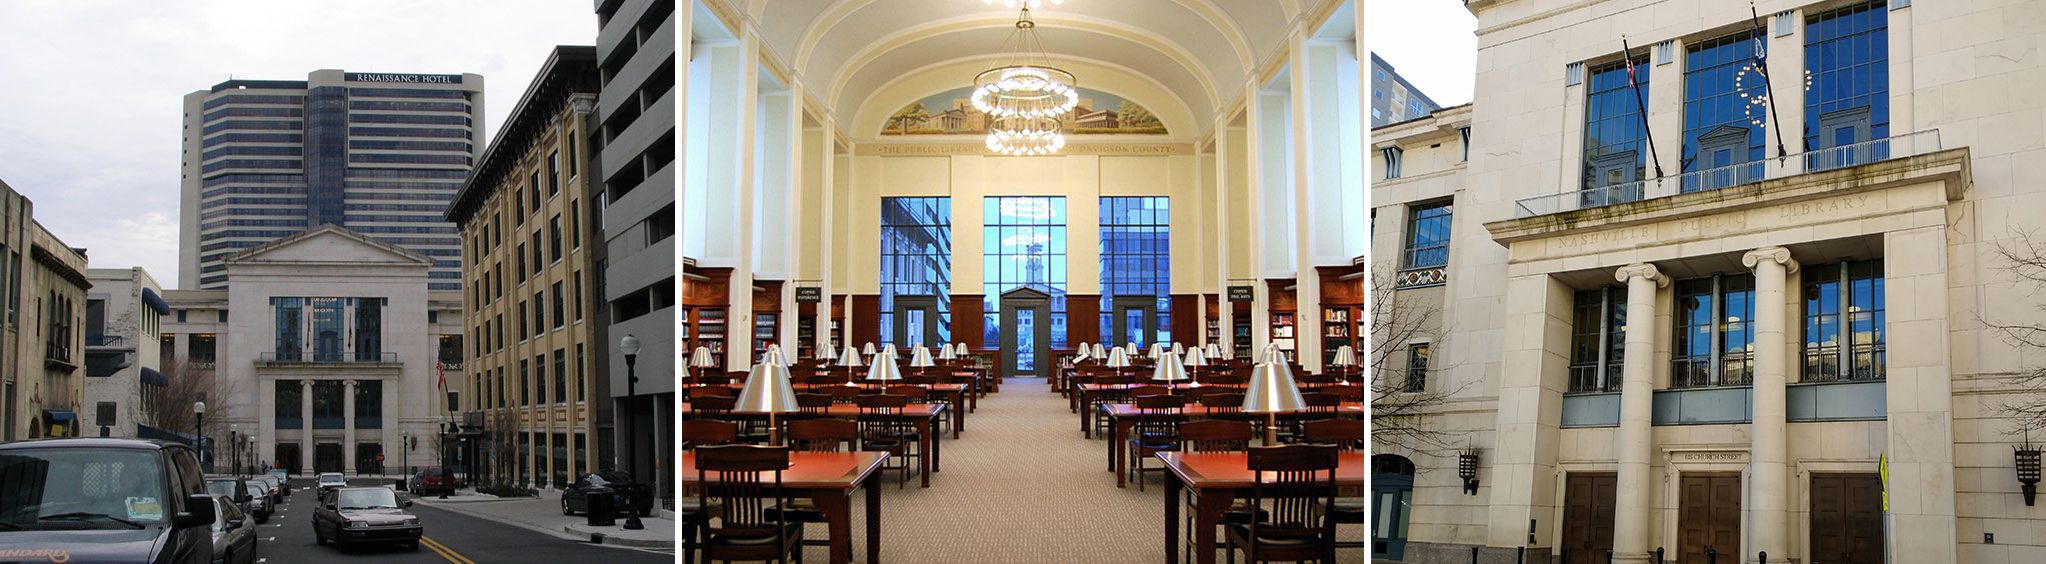 Nashville Public Library in Nashville, TN